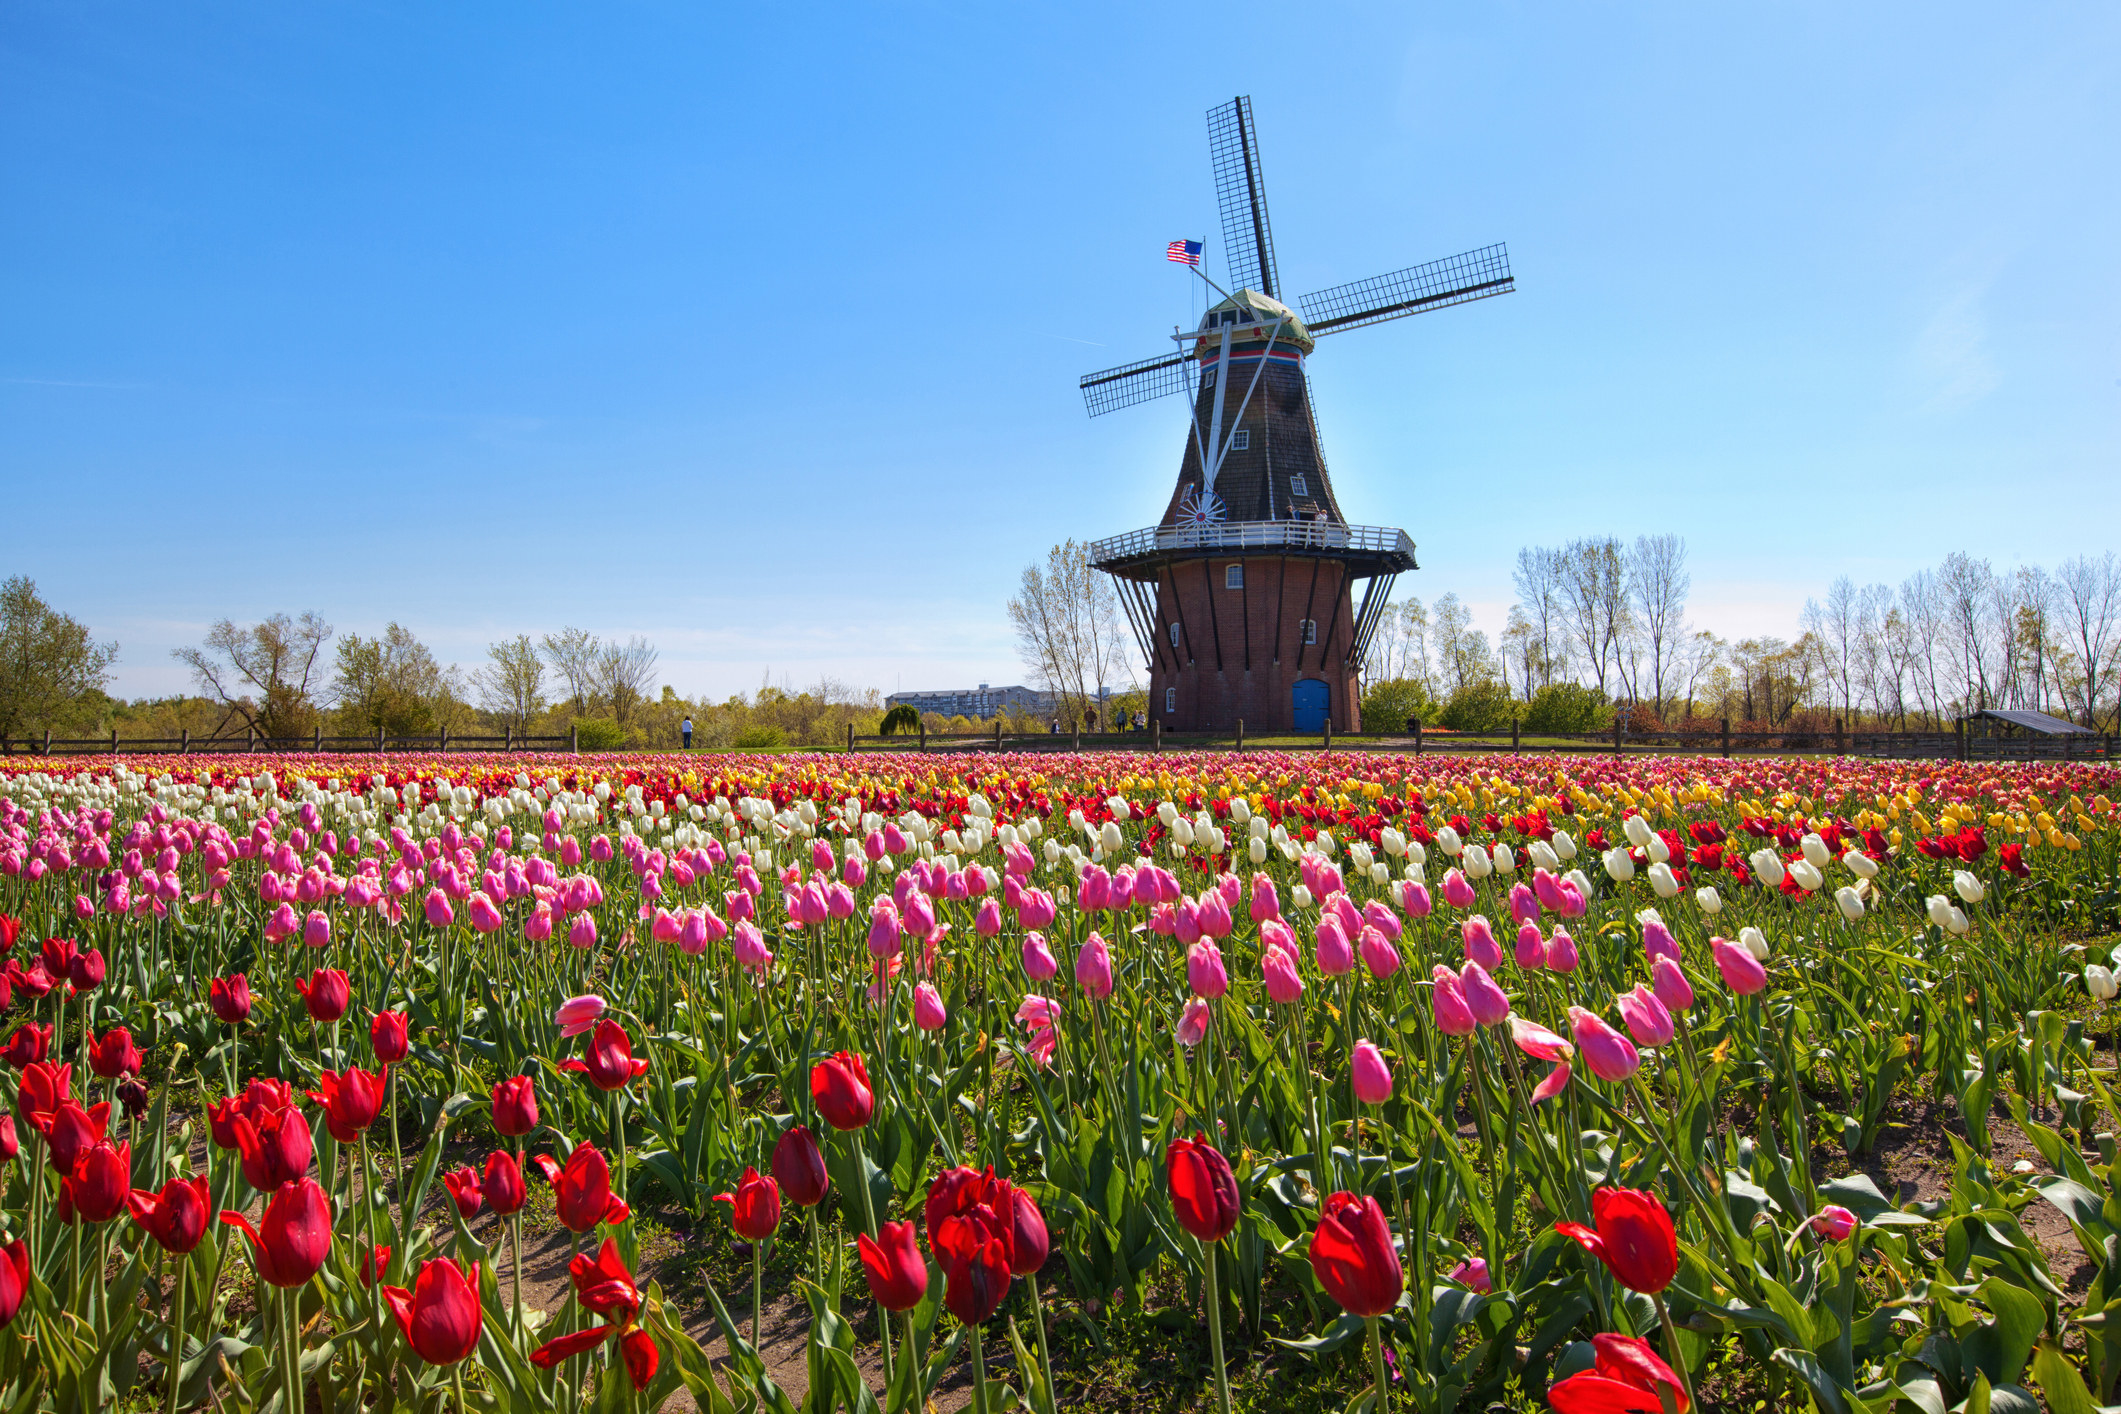 Dutch-style windmill in a field of tulips